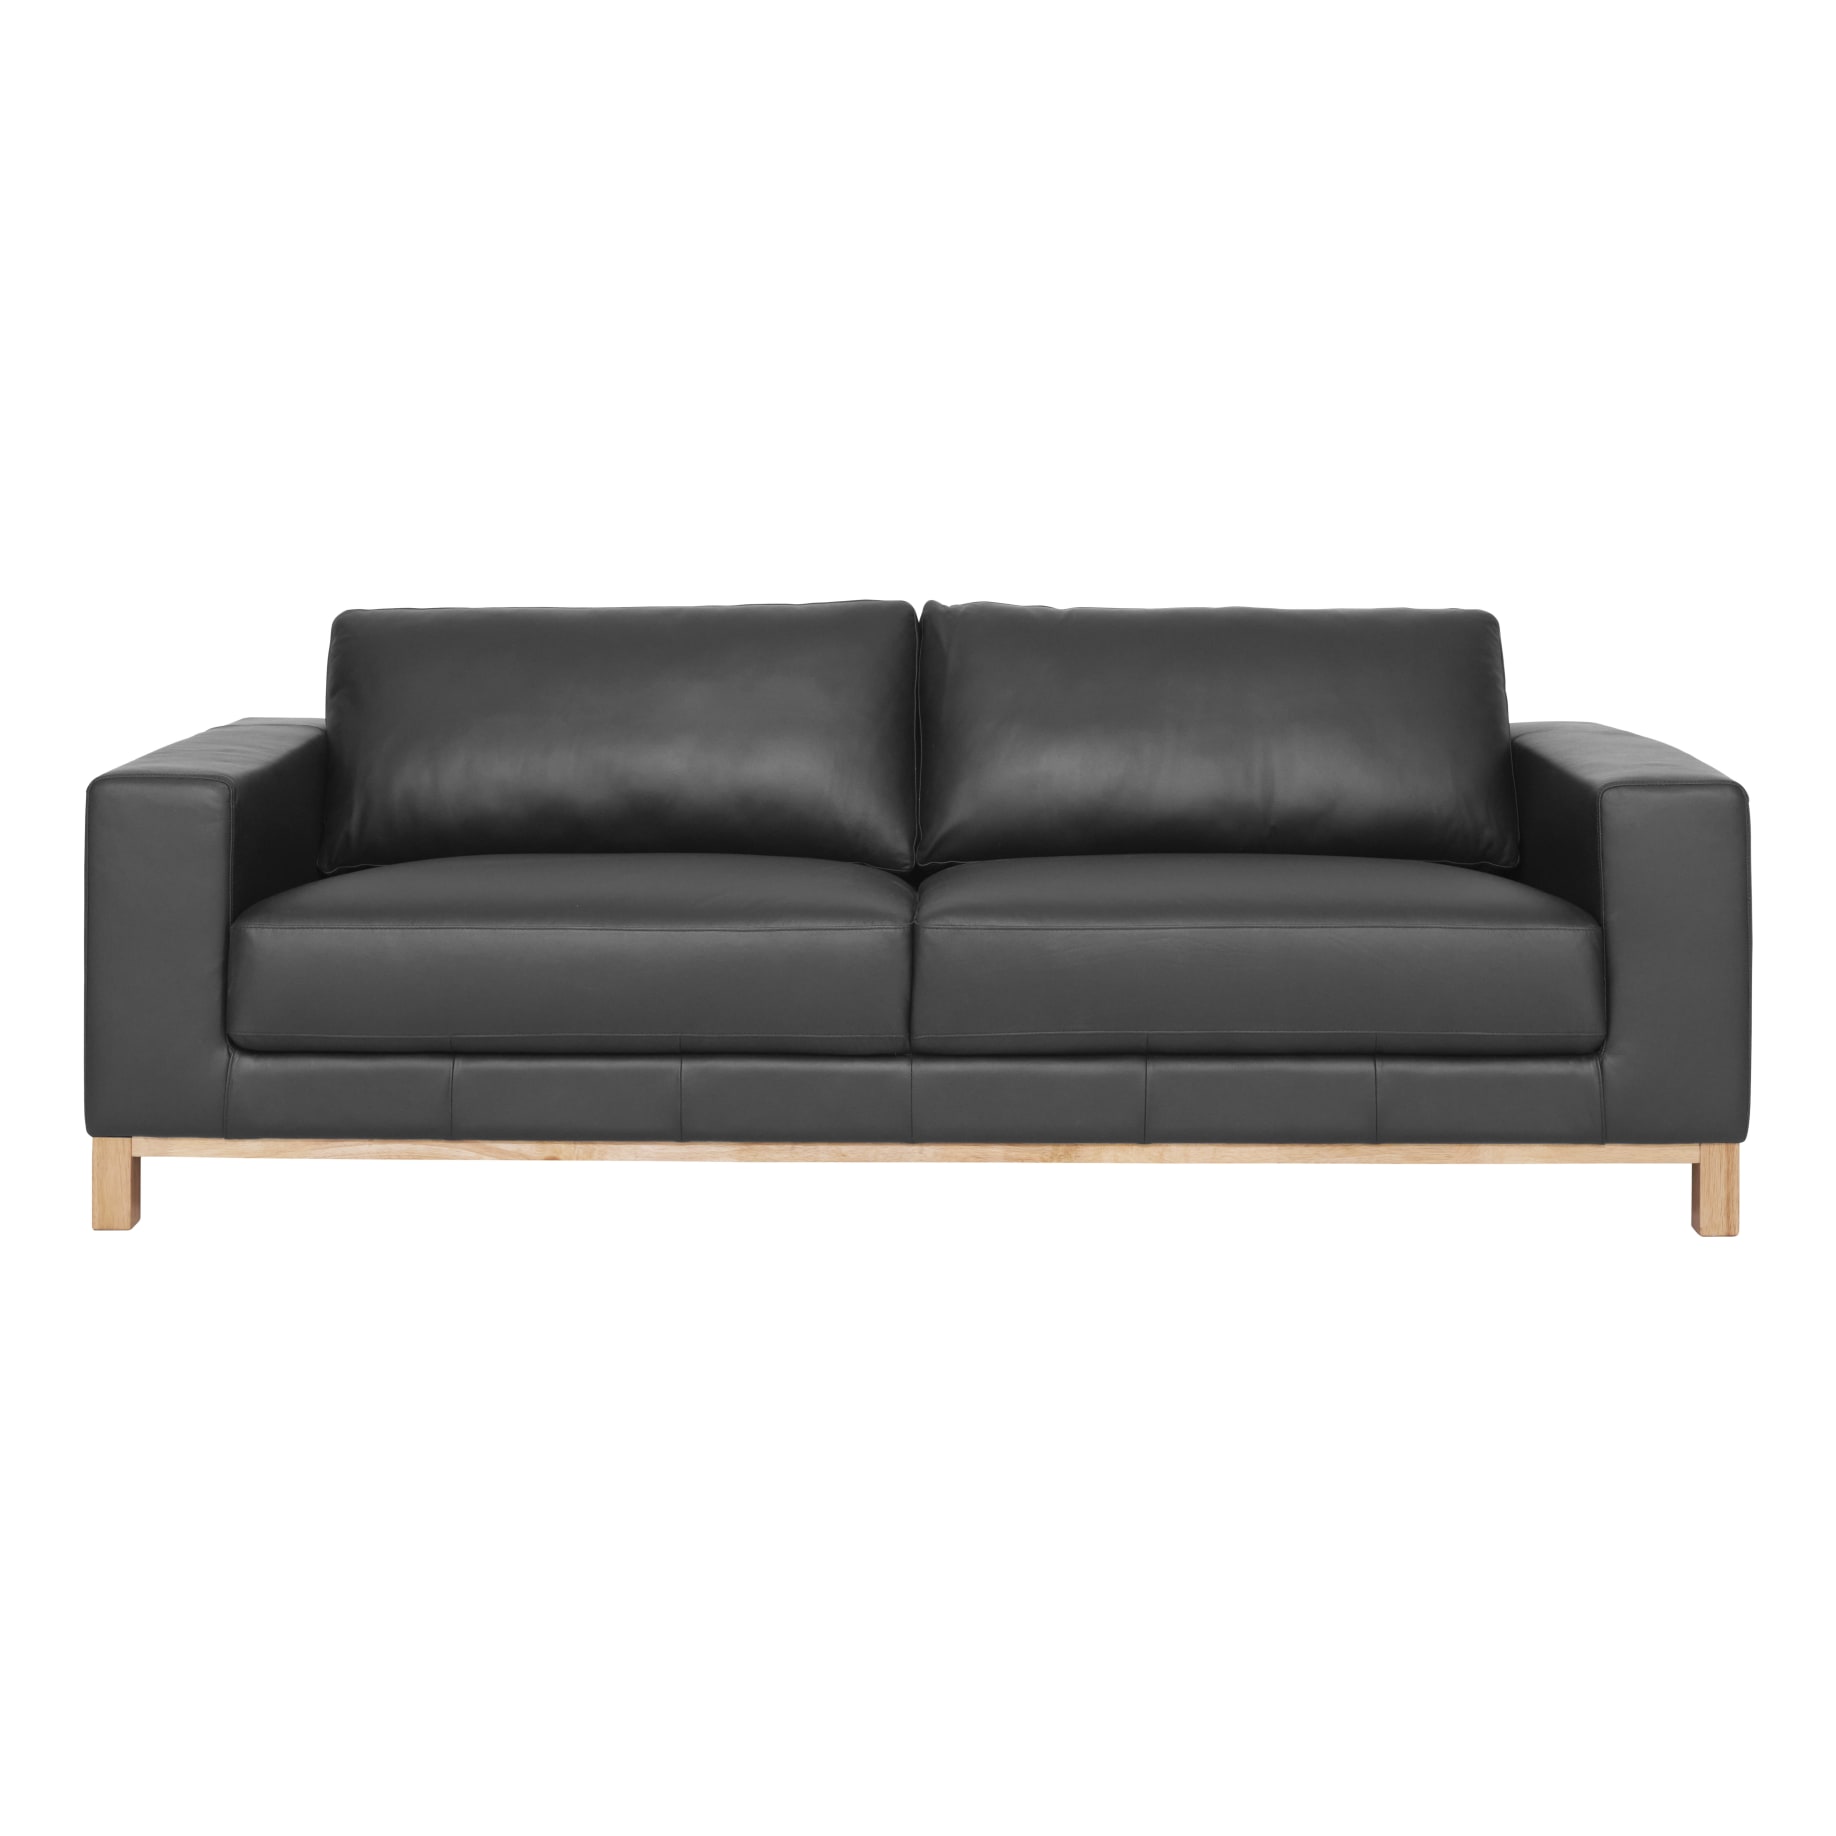 Jasper 3 Seater Sofa in Linea Leather Charcoal